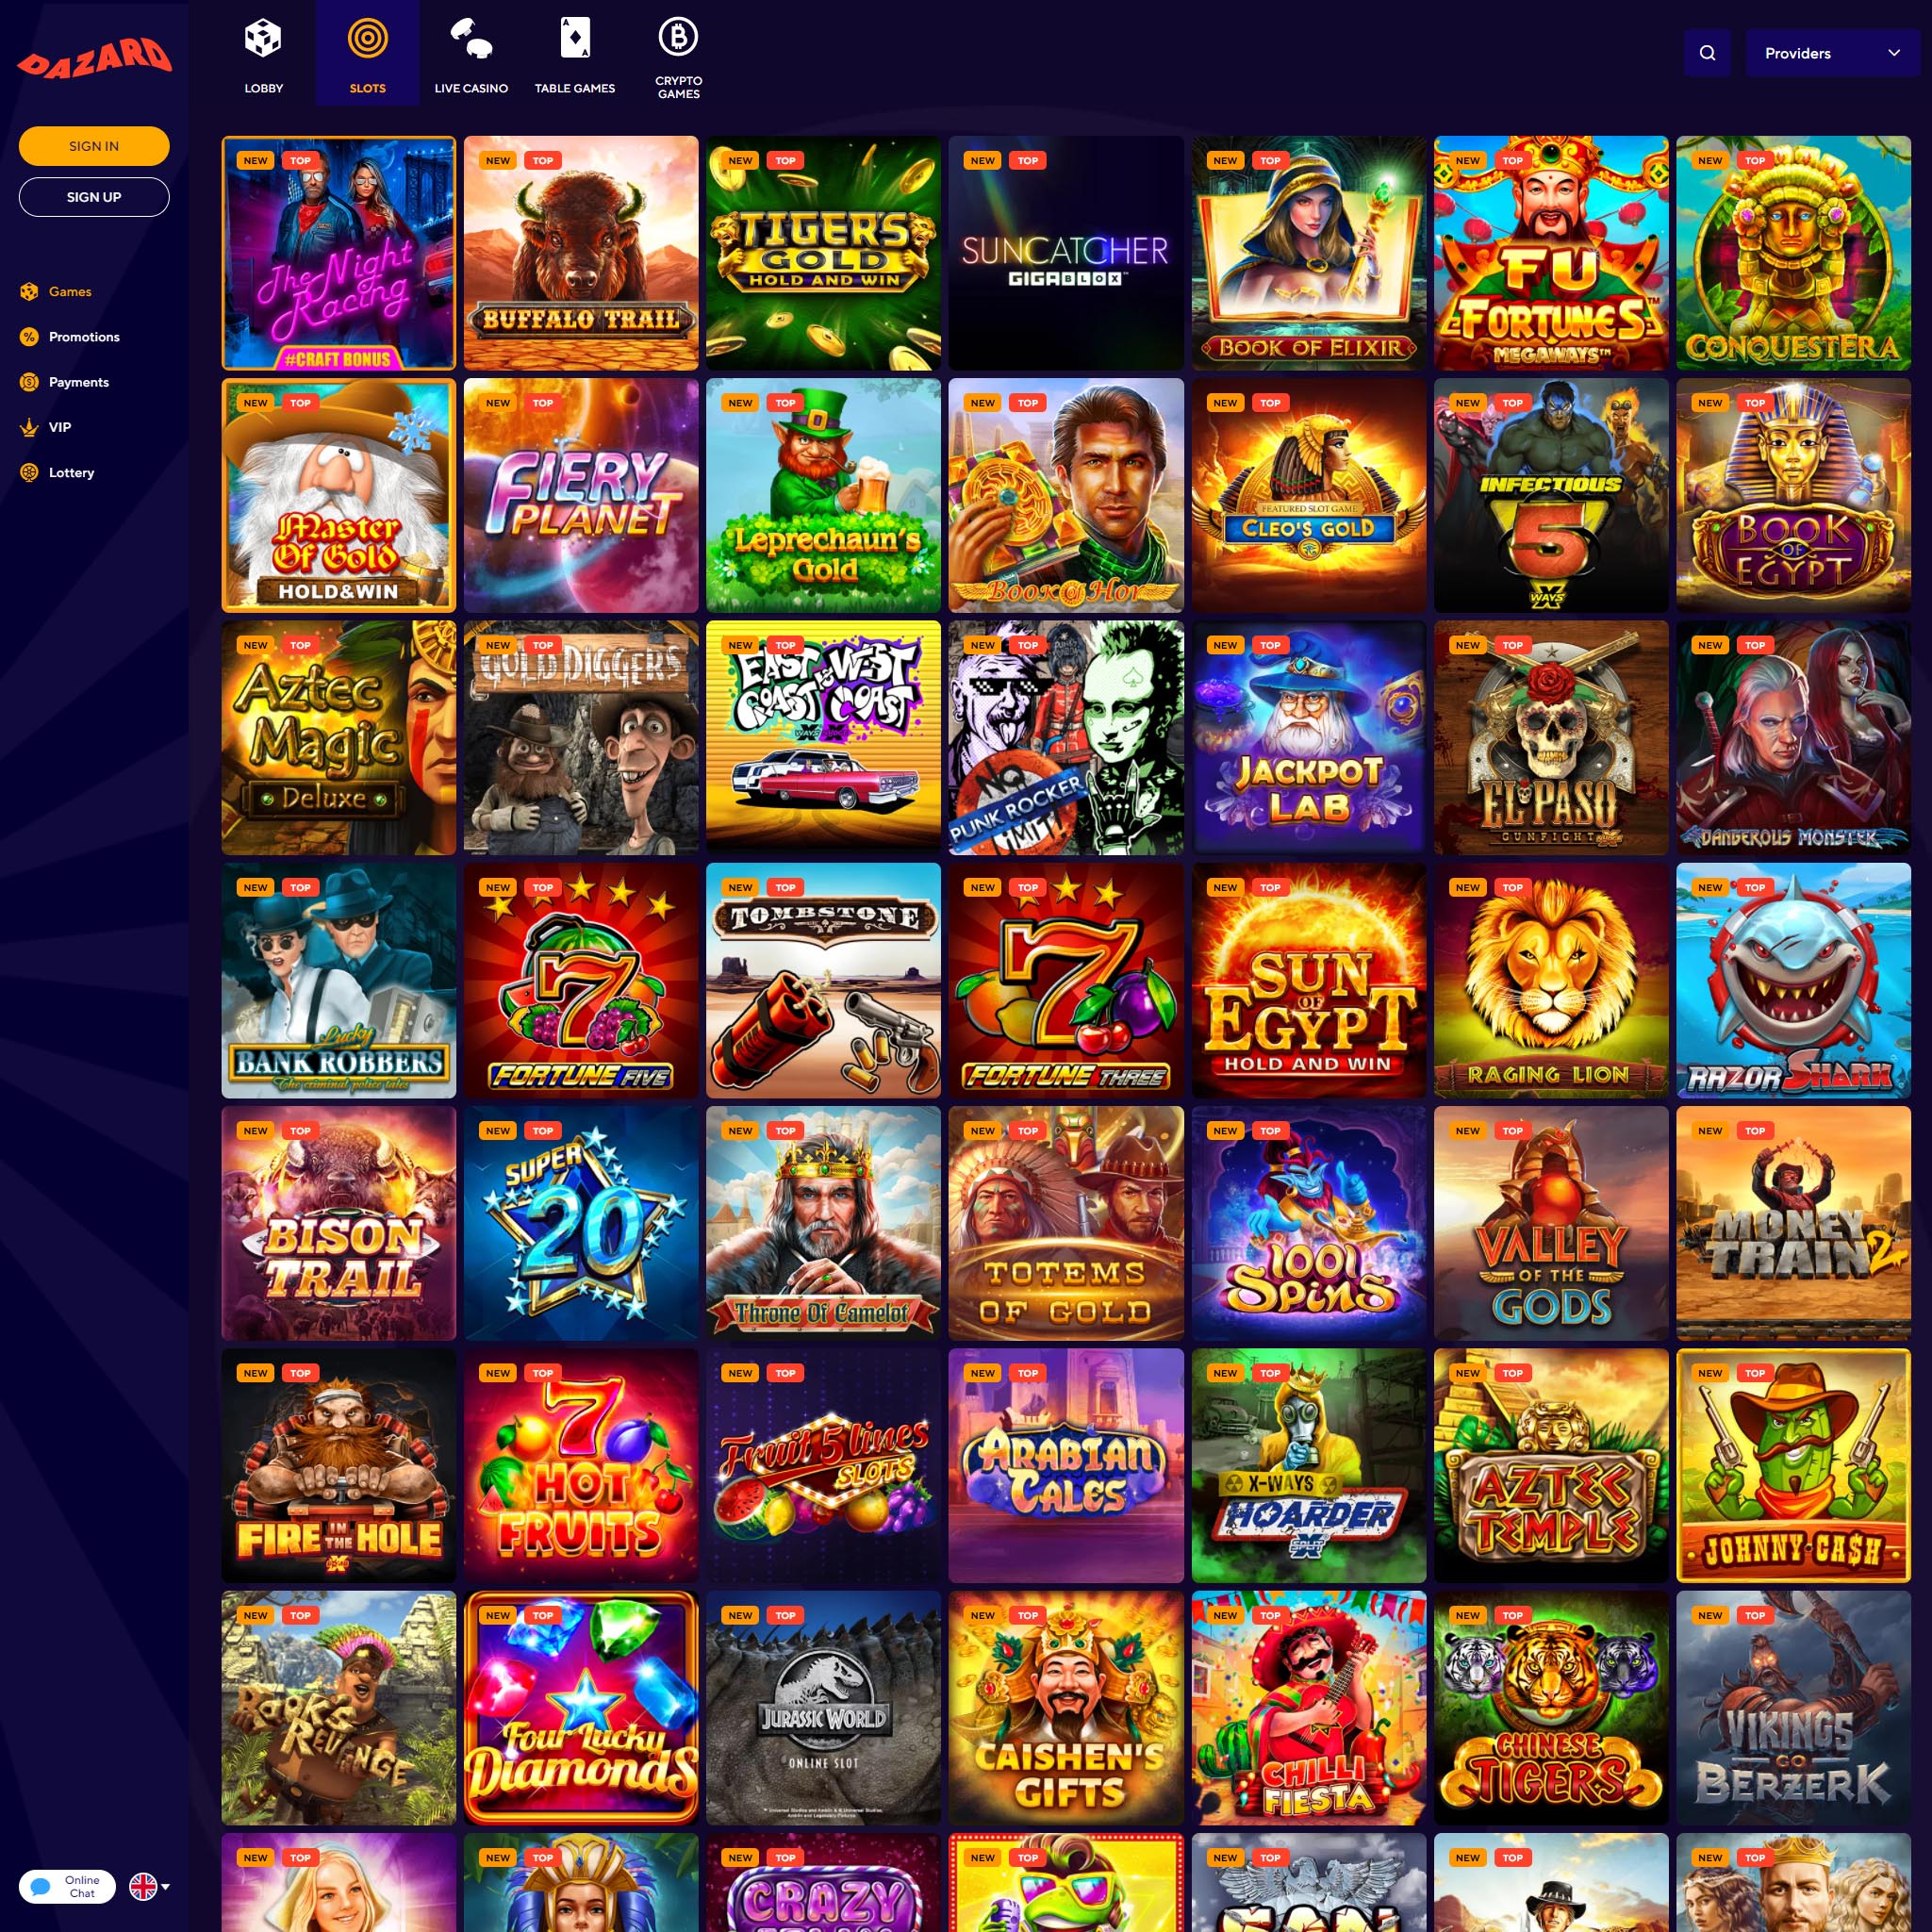 Dazard Casino full games catalogue